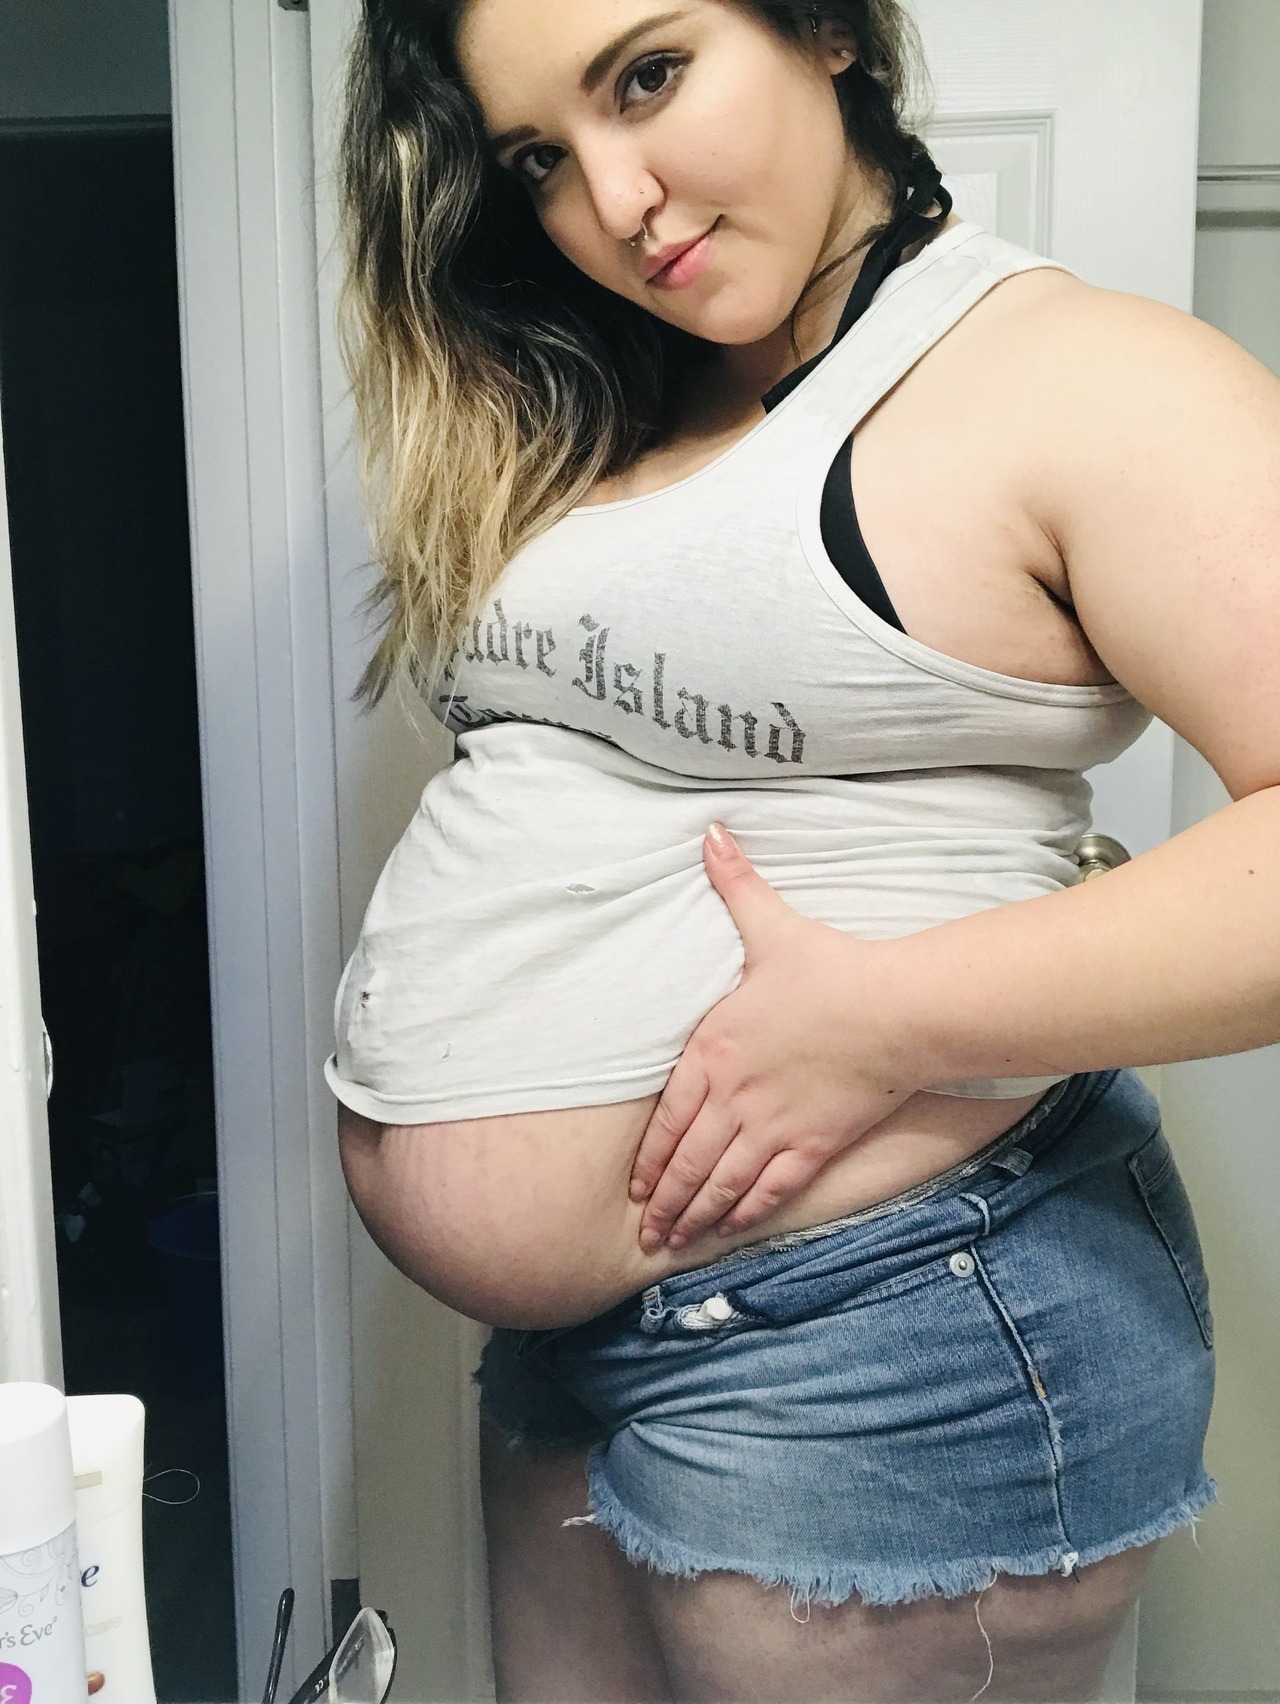 Hot girl fat belly